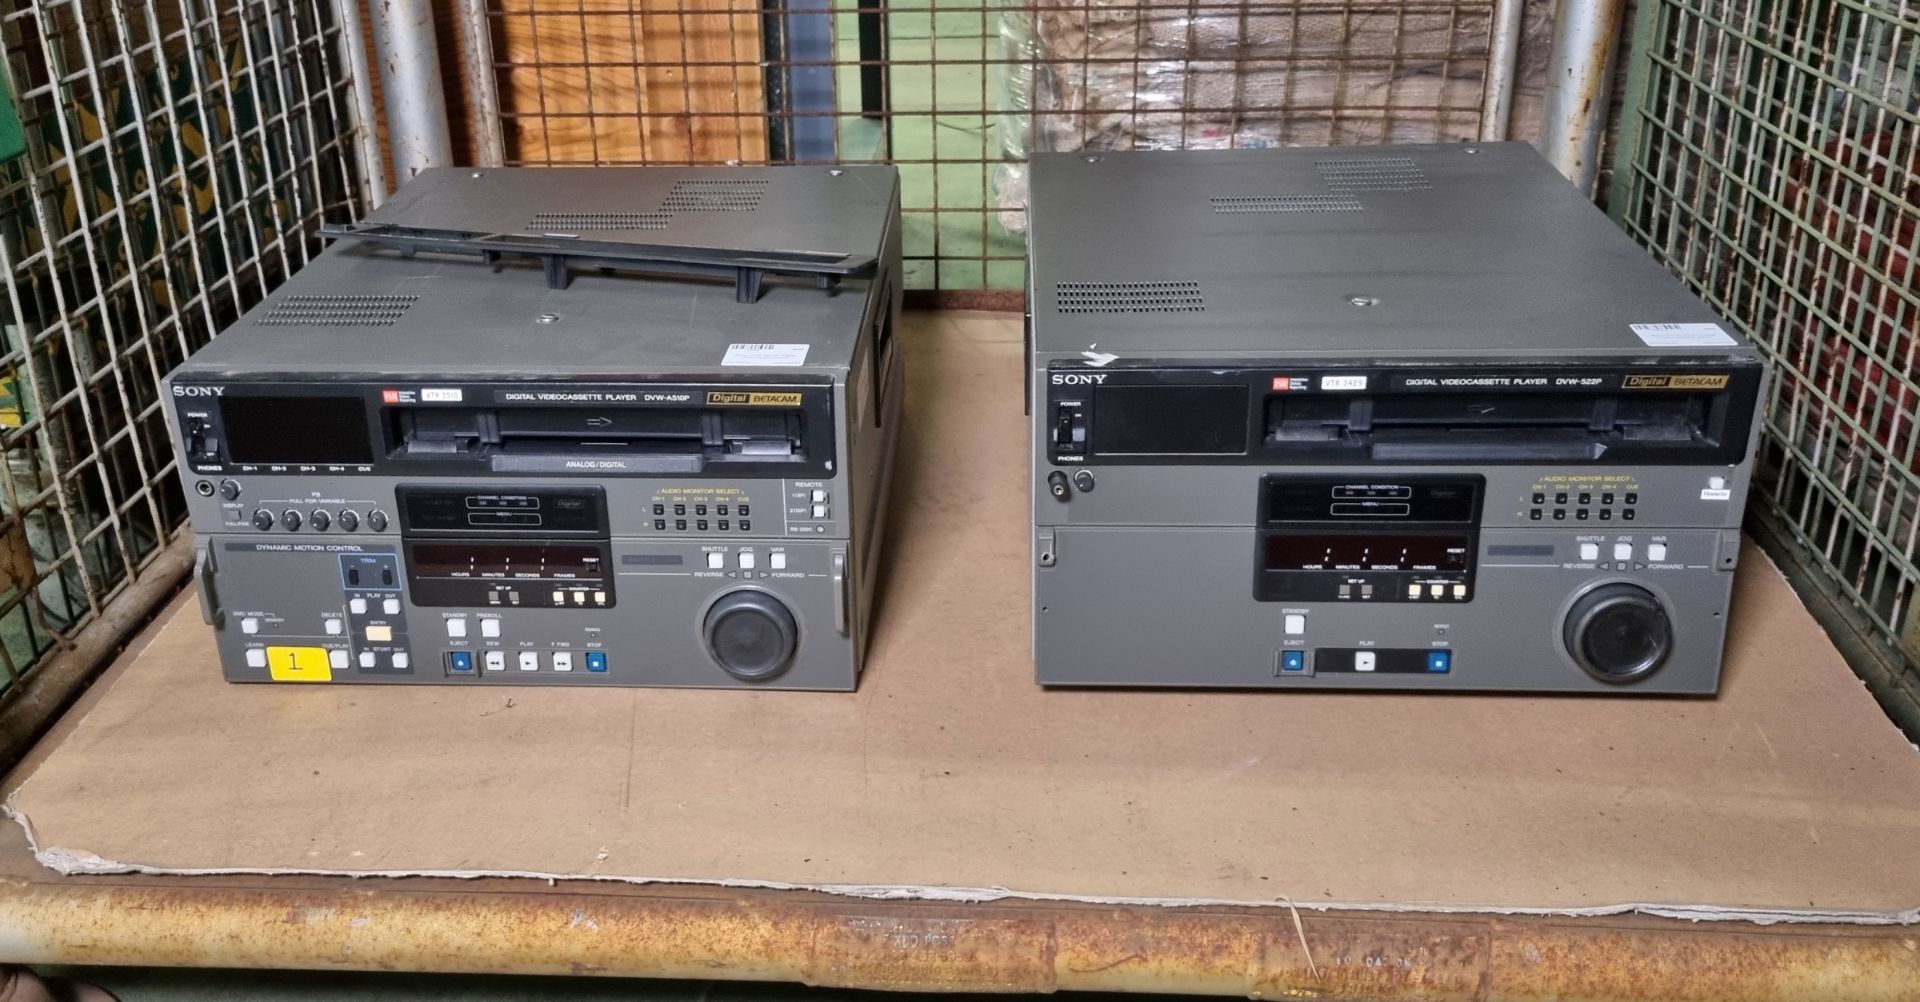 Sony DVW-A510P Digital video cassette player, Sony DVW-522P Digital video cassette player